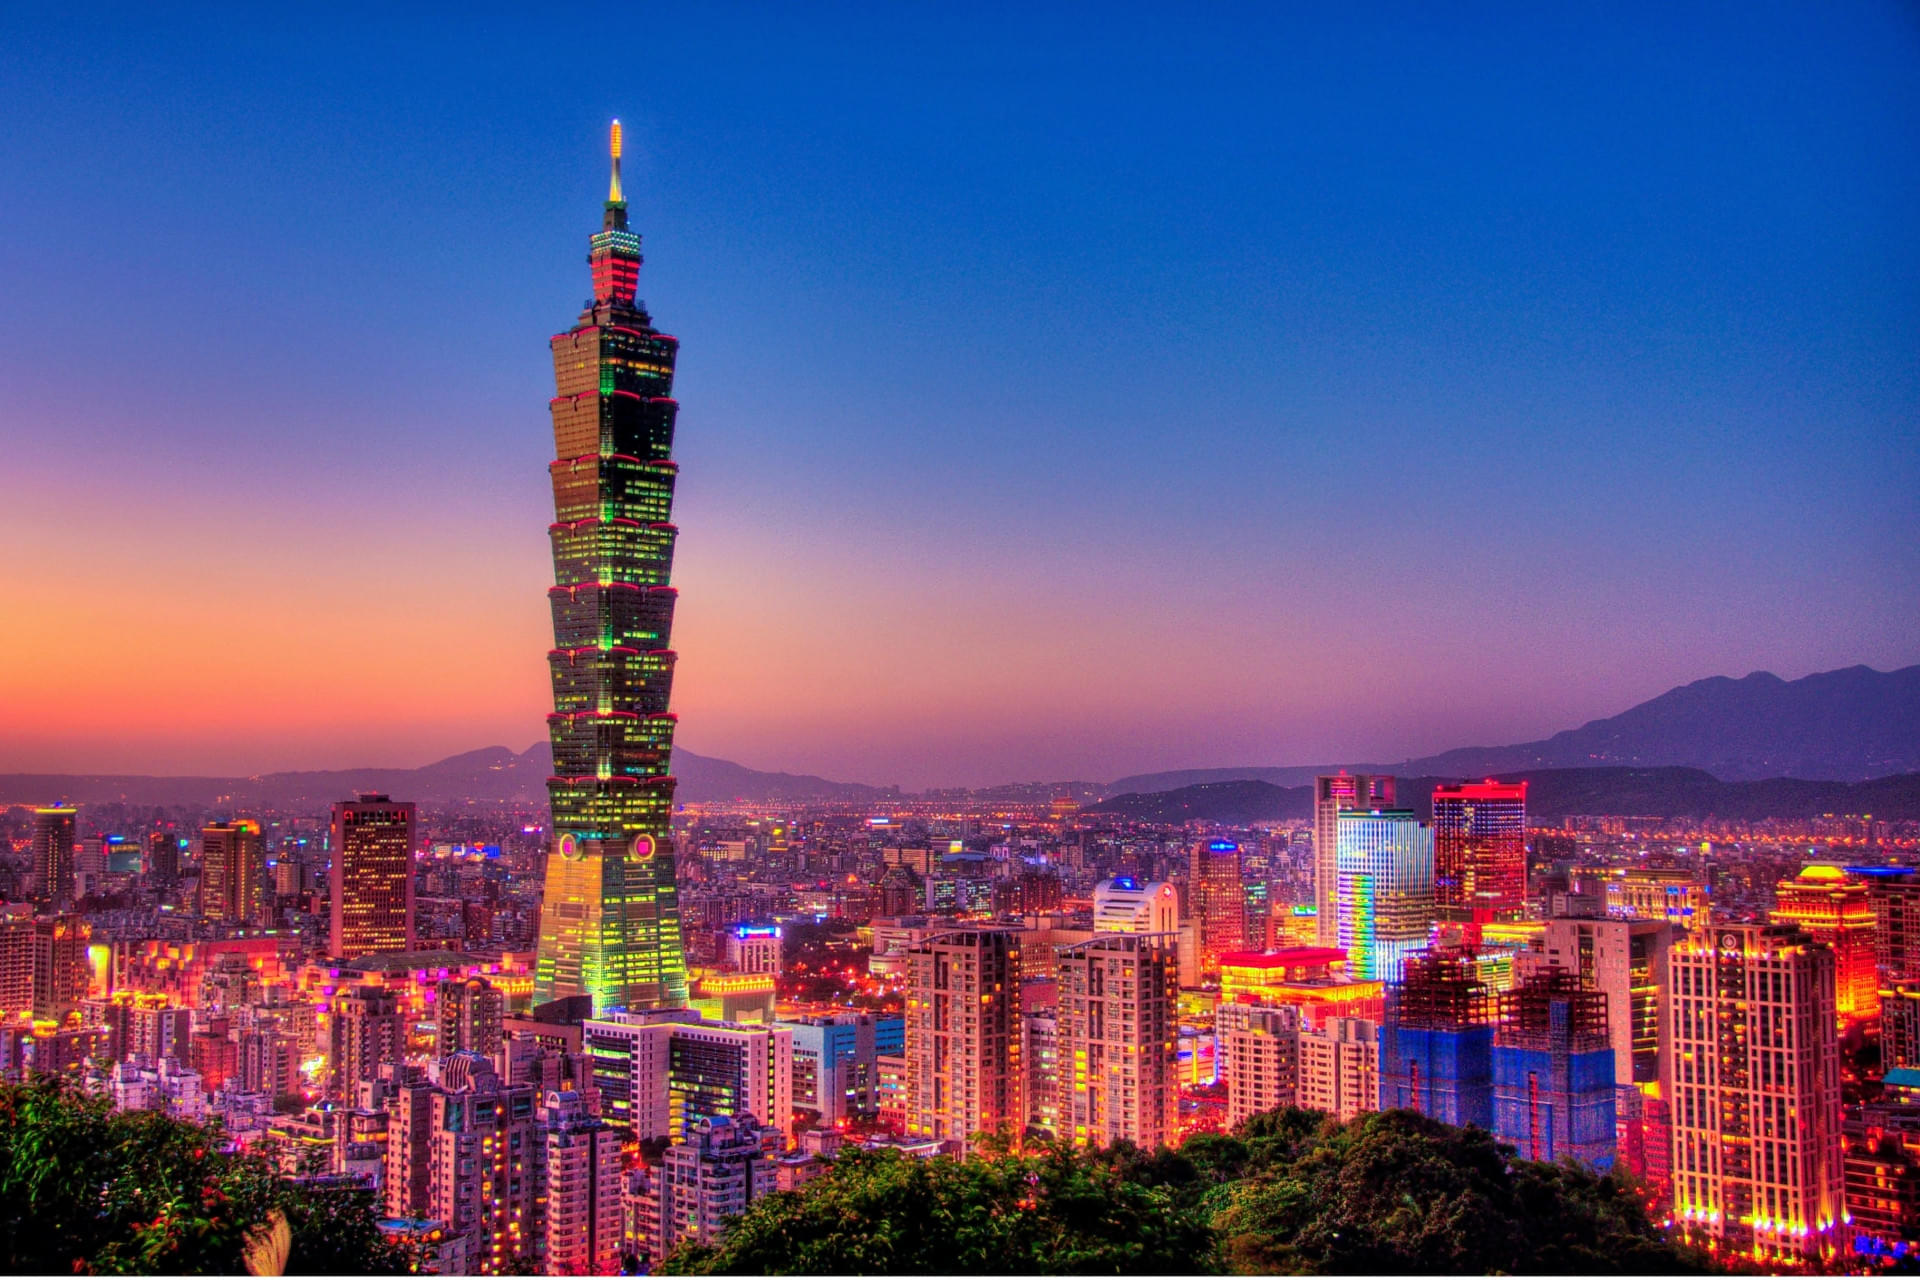 Taipei 101 Overview